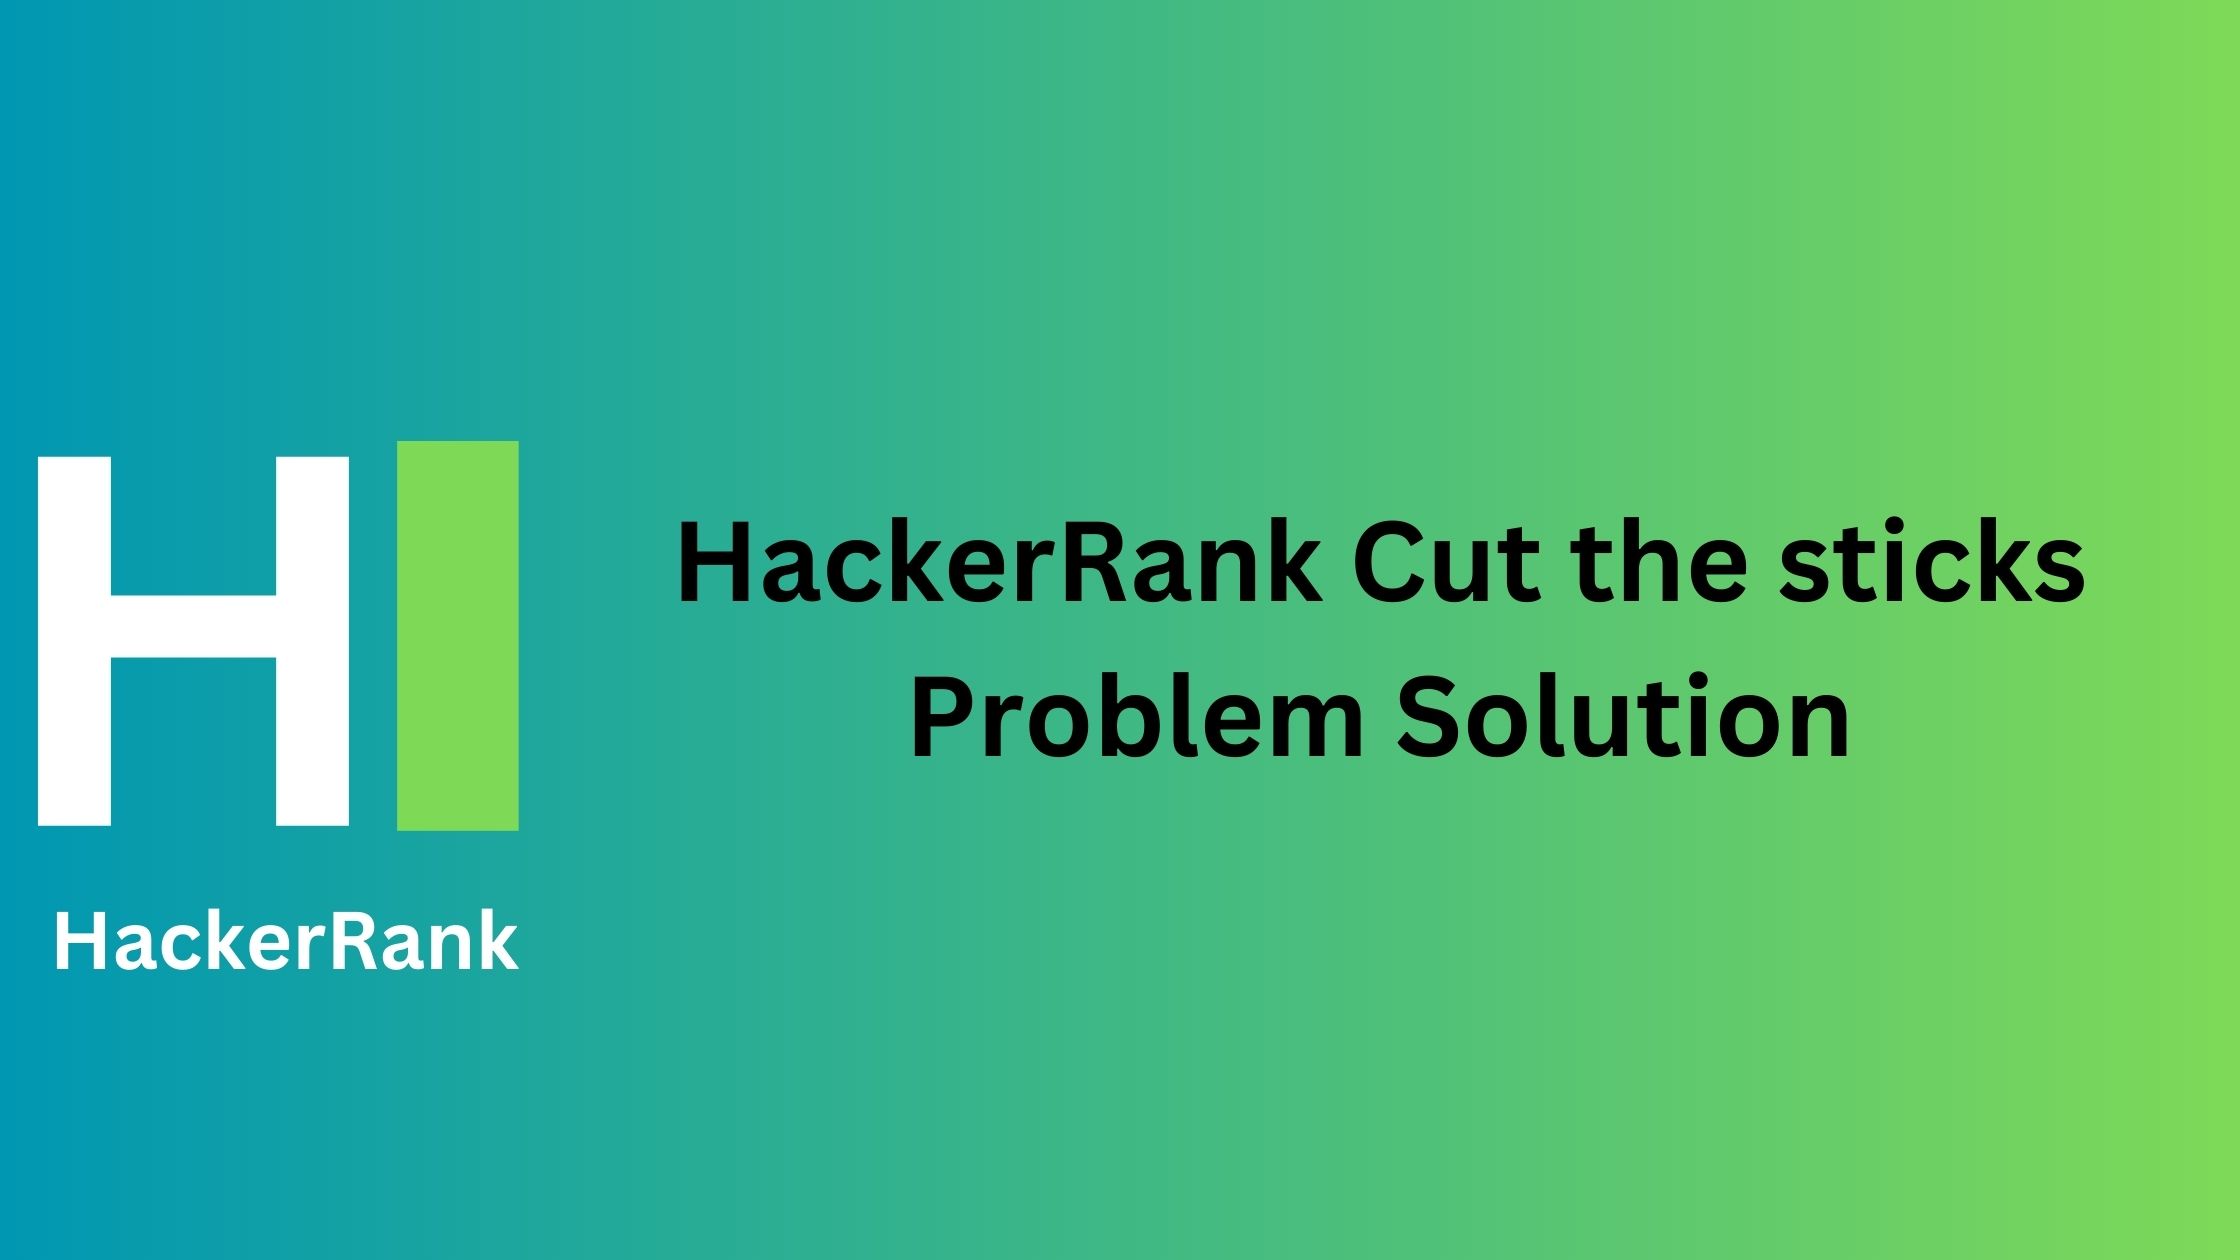 HackerRank Cut the sticks Problem Solution